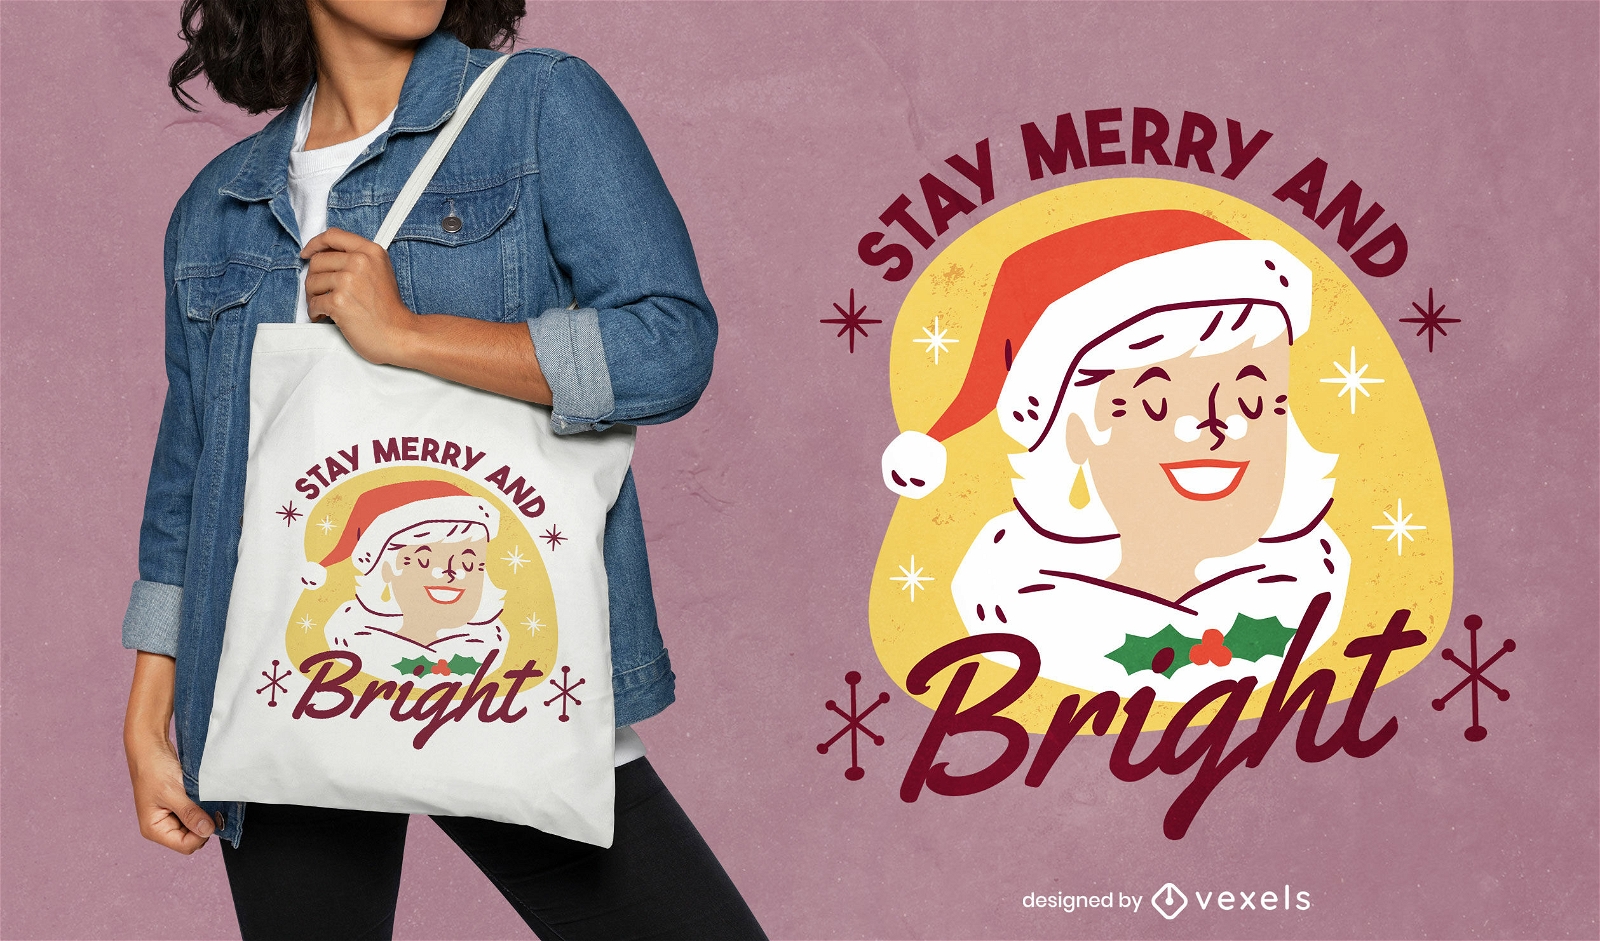 Festive holiday tote bag design